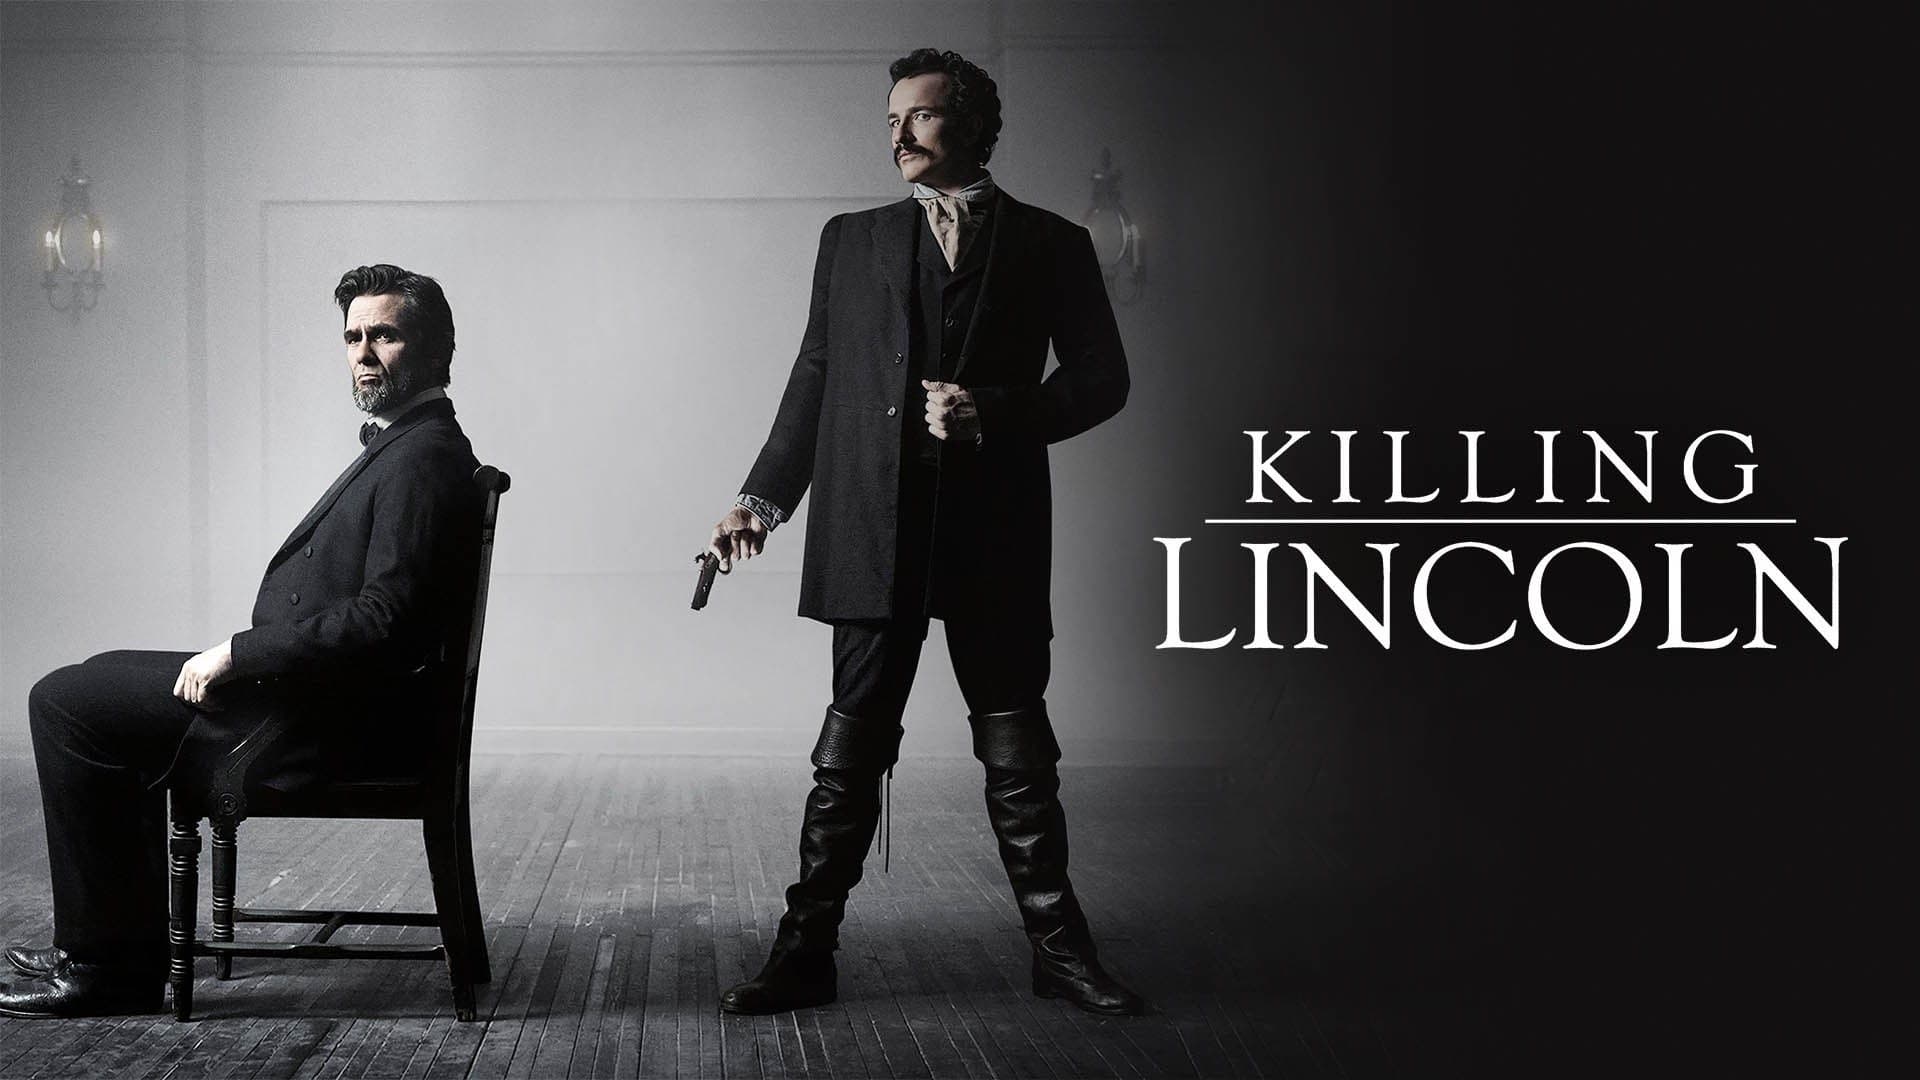 Killing Lincoln (2013) แผนฆ่า ลินคอล์น